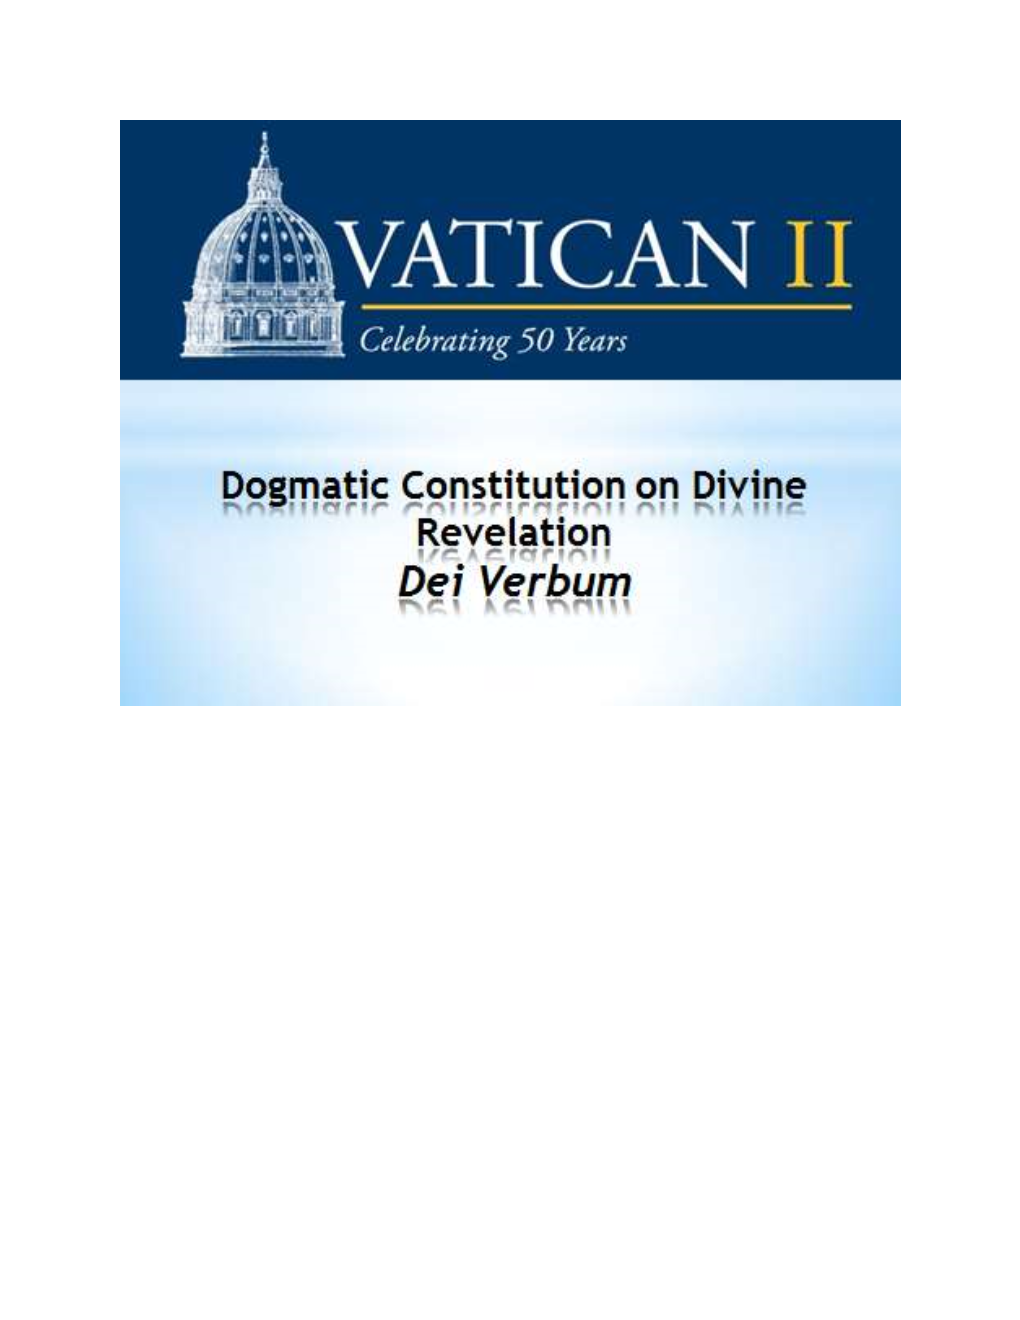 Vatican Council II: Divine Revelation